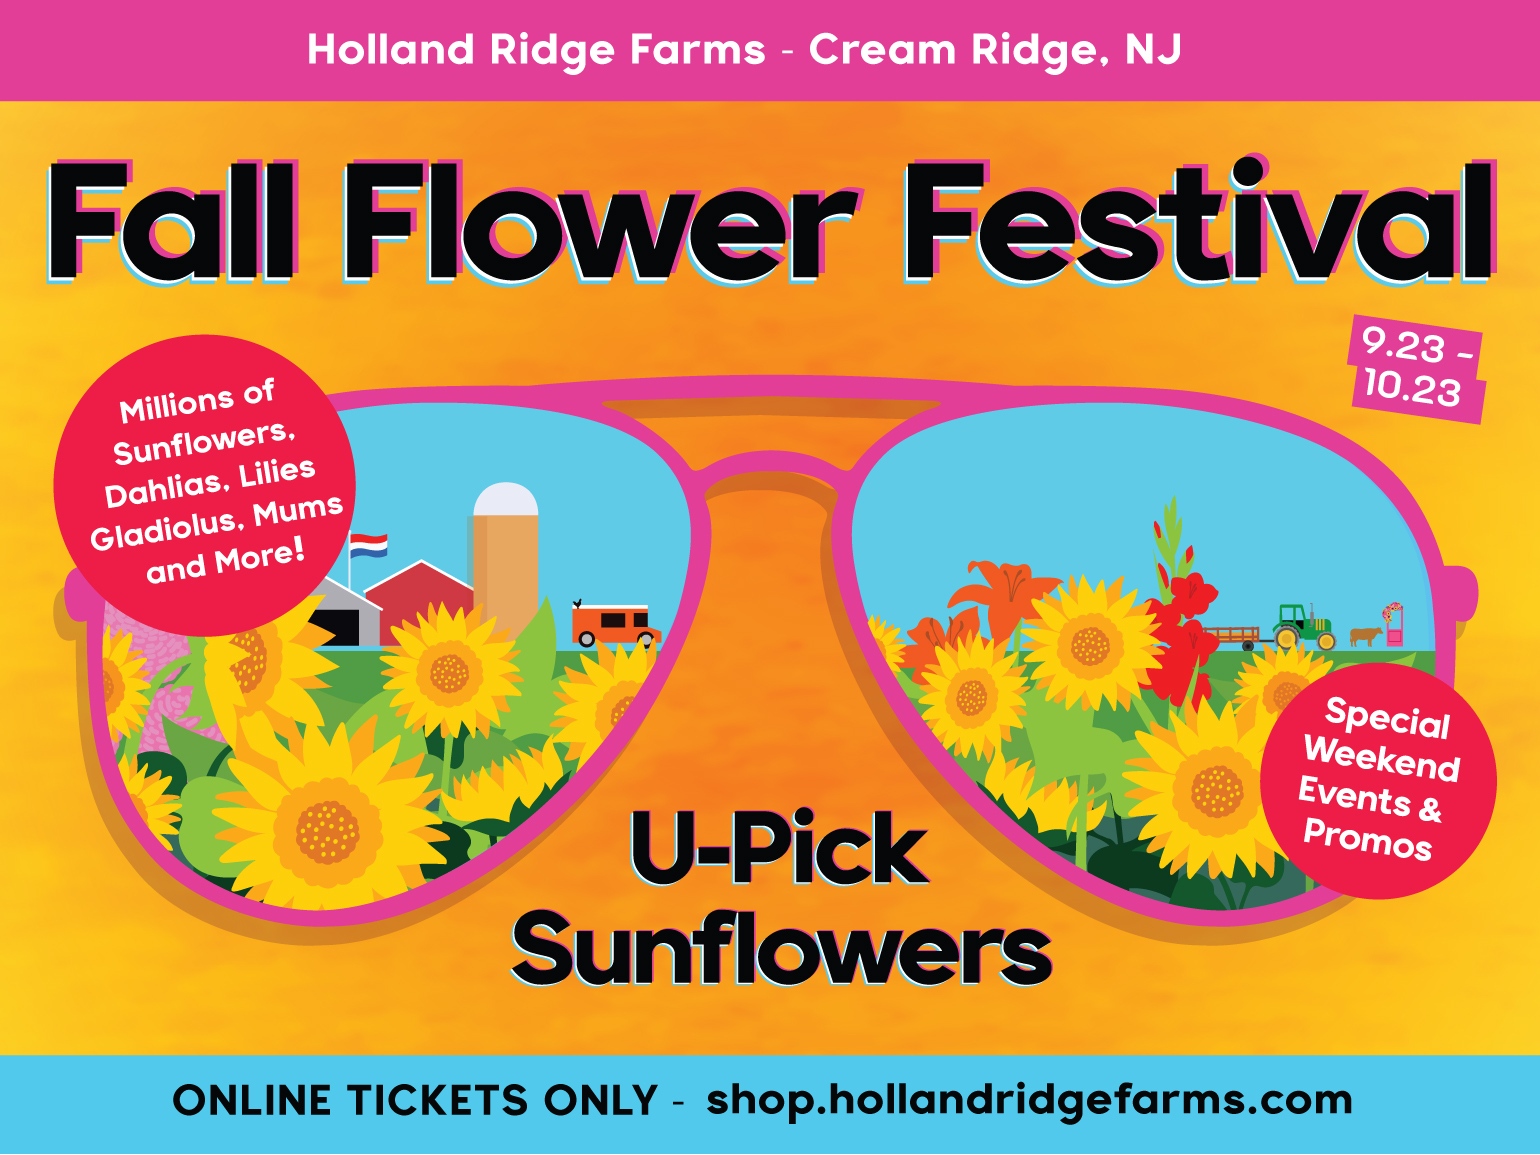 Holland Ridge Farms Fall Flower Festival - U-Pick Sunflowers